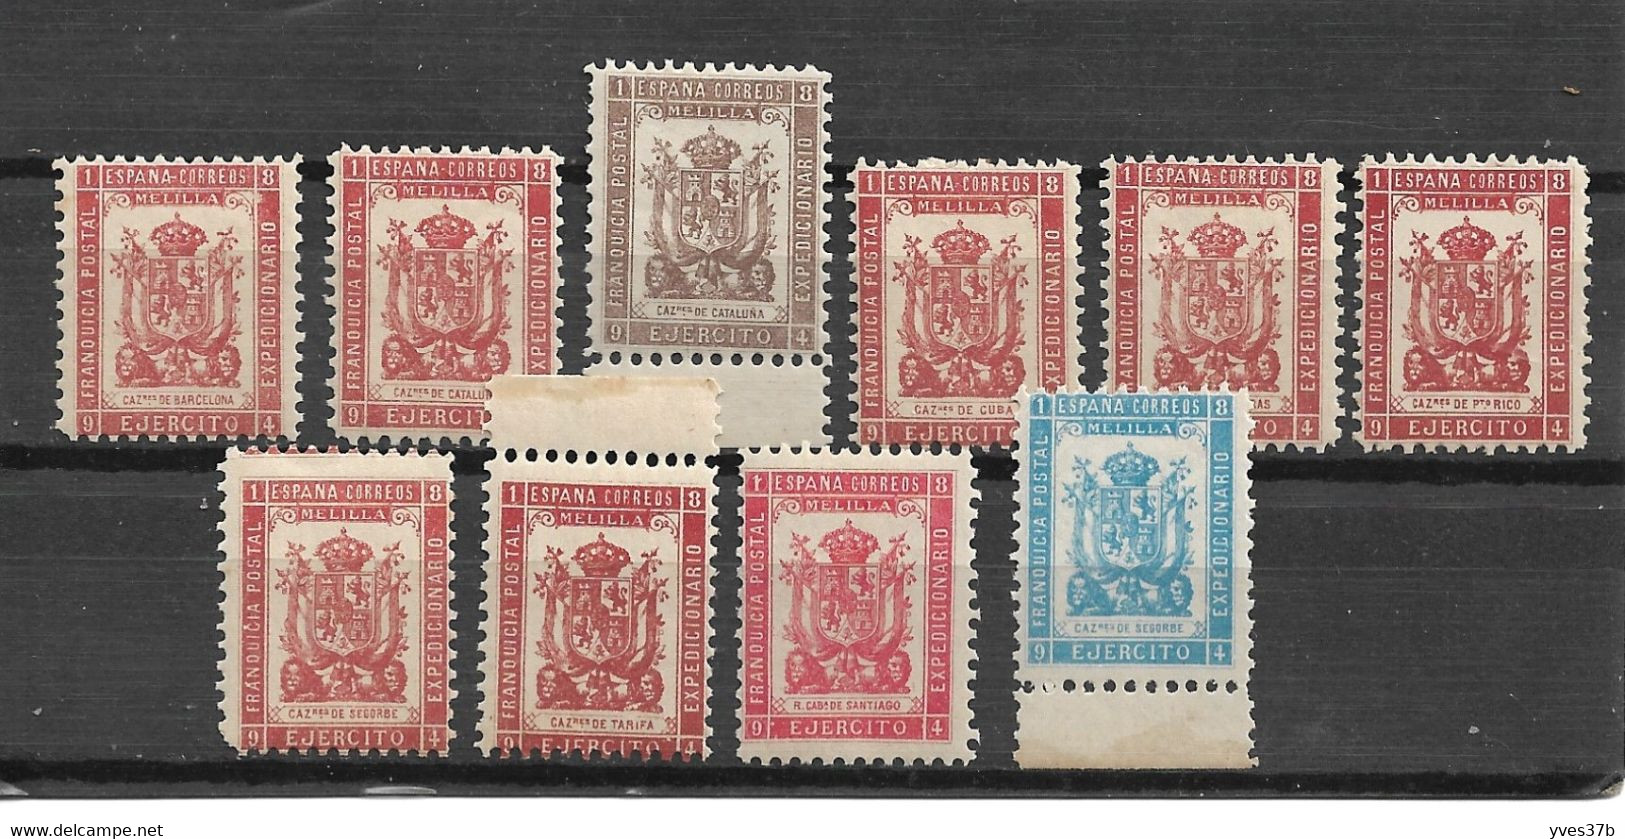 ESPAGNE - MELILLA 1894 - N°20/29 Série Complète - Neuf**  - 10 Val. - N°22, 27 & 28 BdF - SUP - - Militärpostmarken